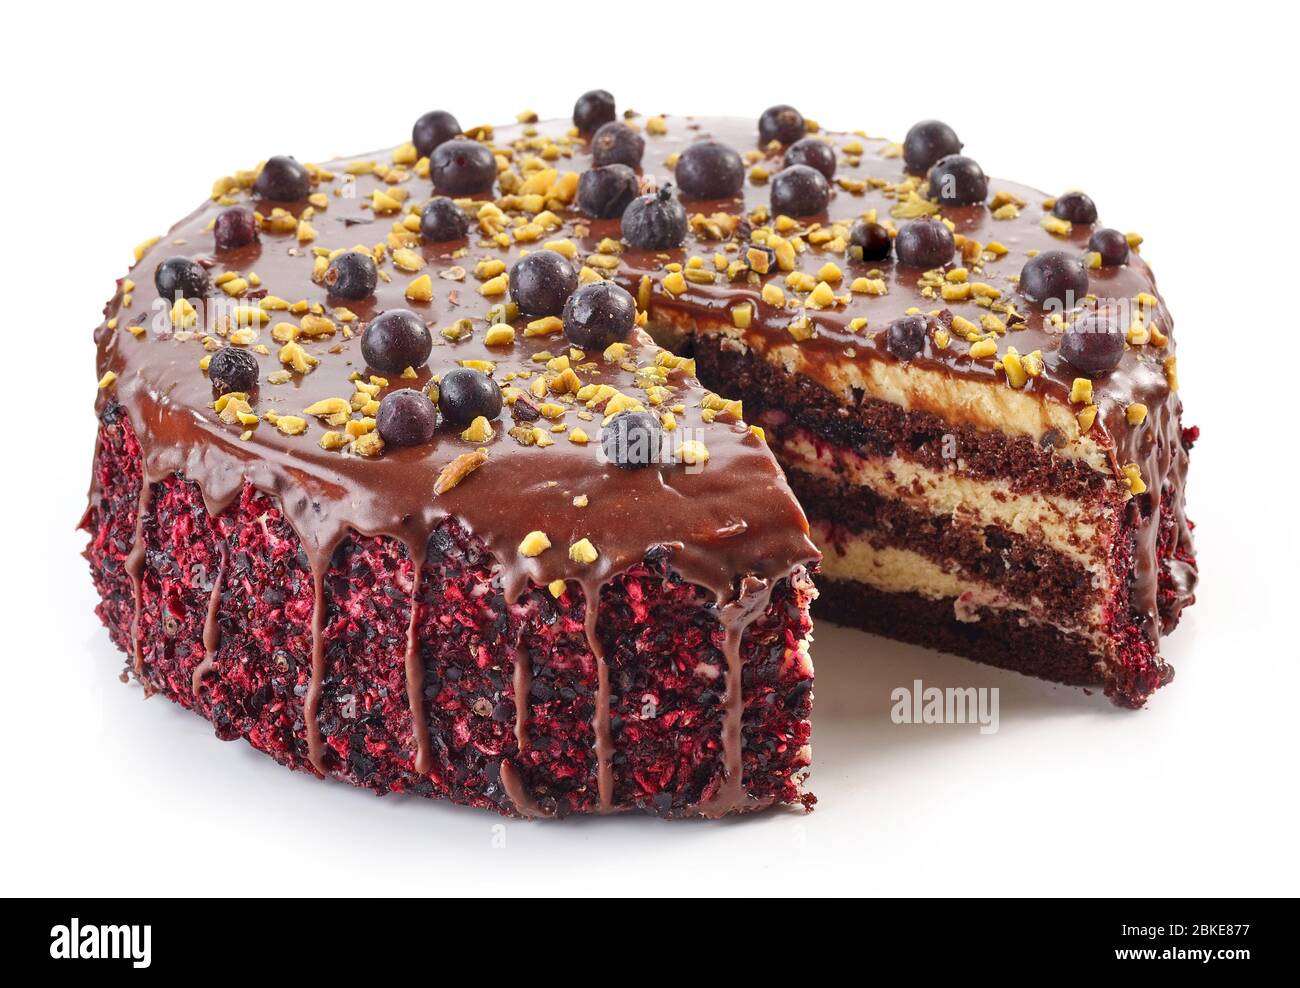 Valentine's Day dessert: chocolate aphrodisiac cake recipe | CBC News